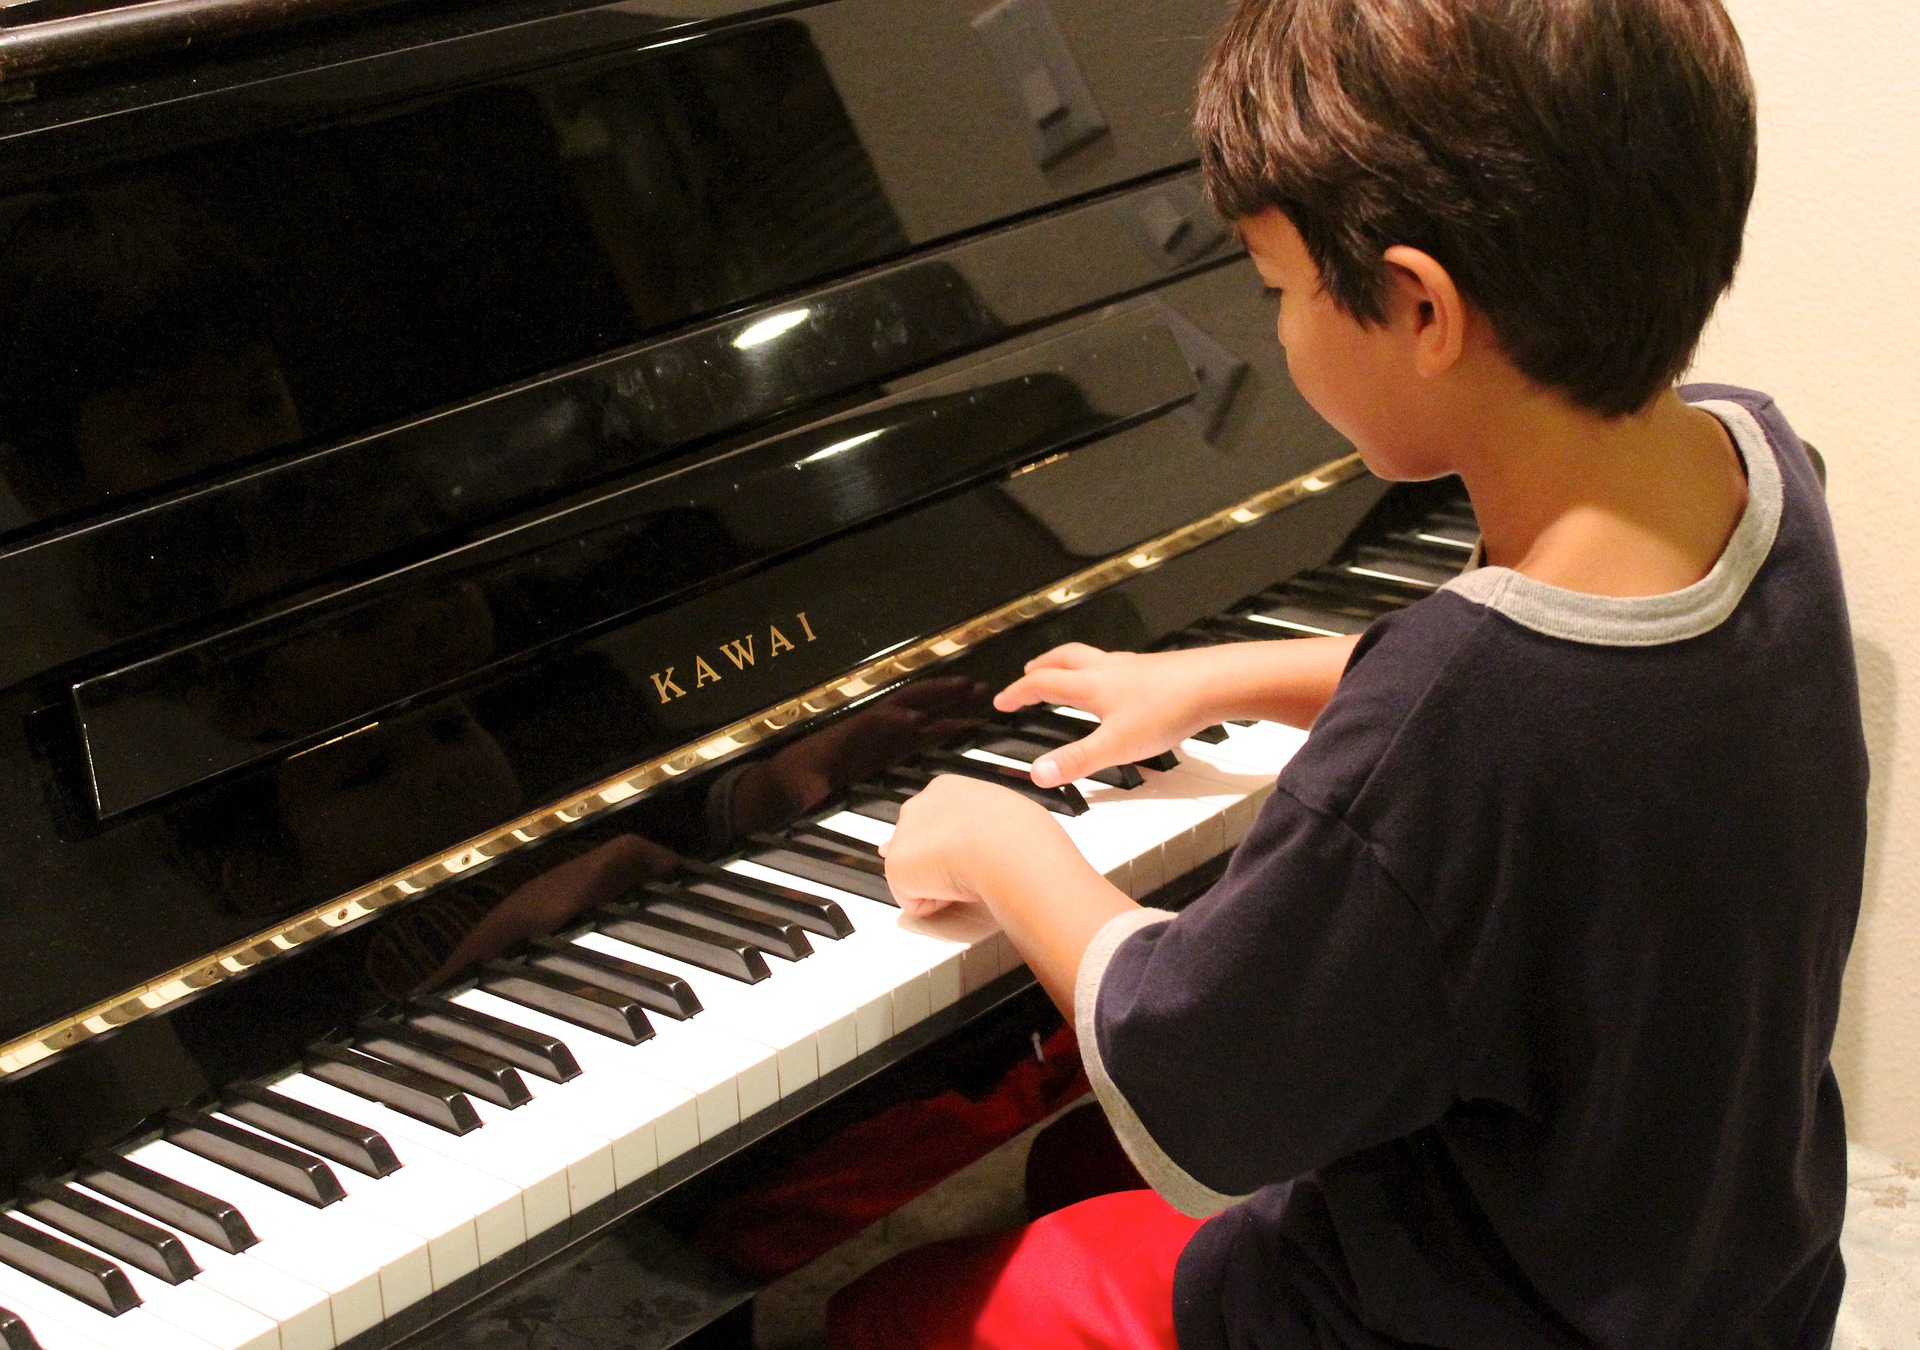 When should a child learn piano